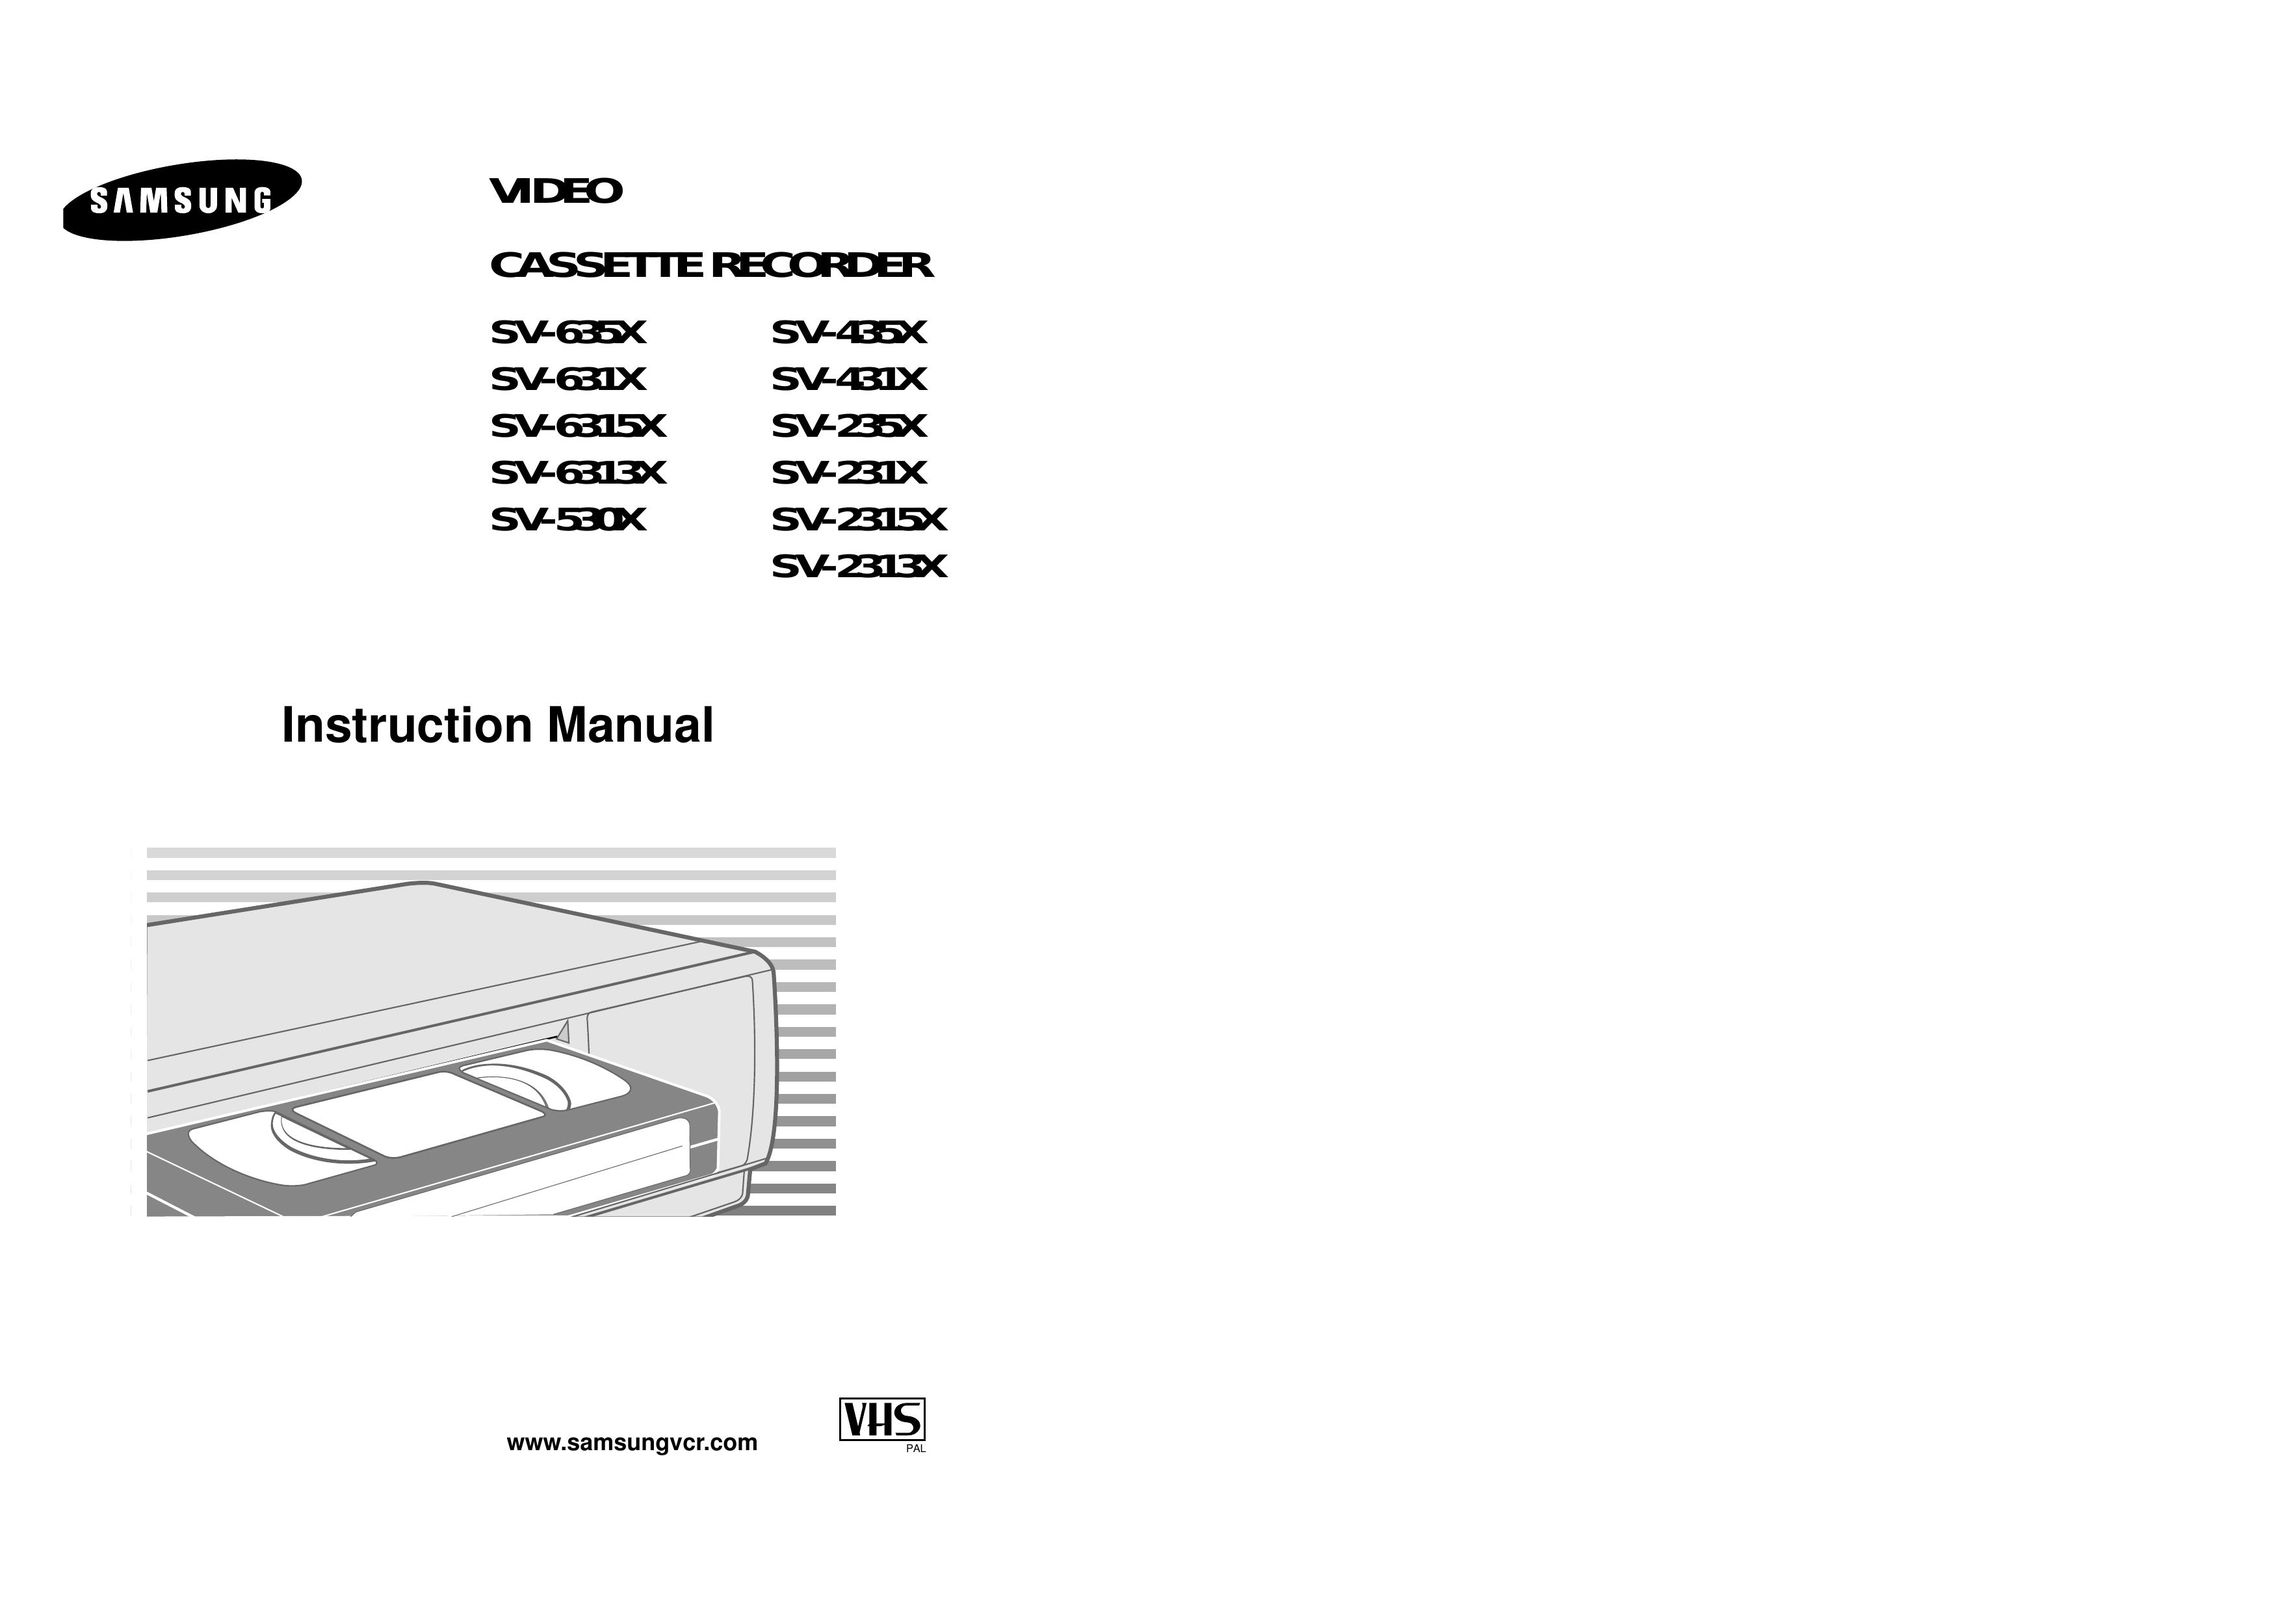 Samsung SV-631X Cassette Player User Manual